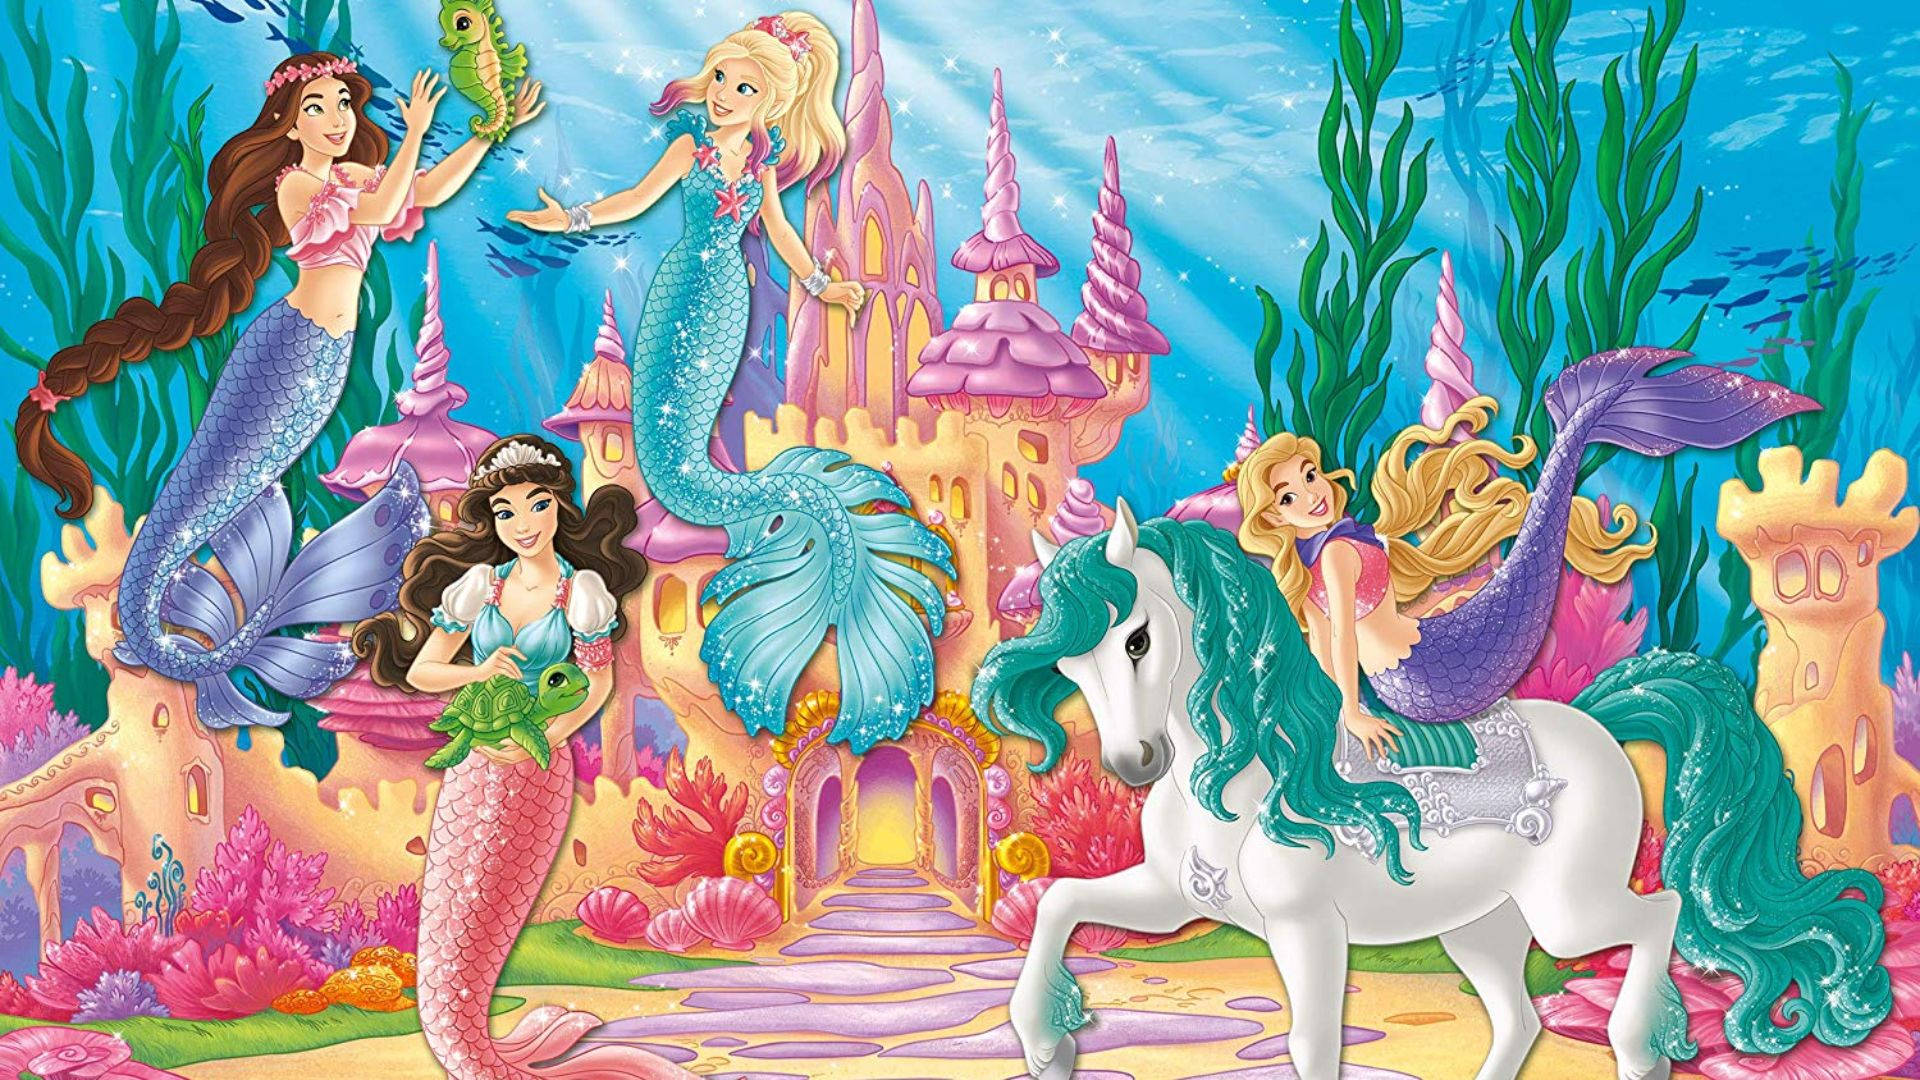 imgurcom  Mermaid wallpapers Mermaid wallpaper backgrounds Mermaid